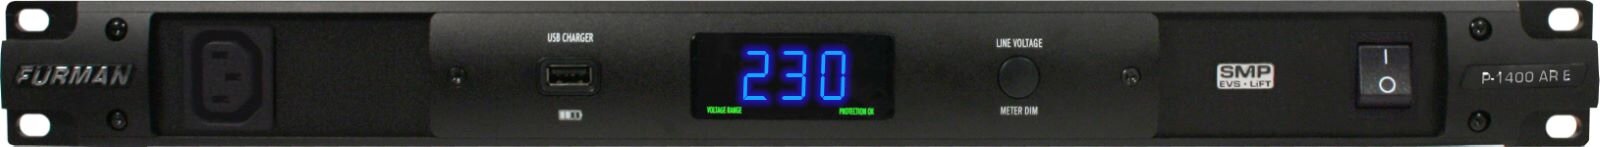 Furmann P-1400 AR E Voltage Regulator / Power Conditioner : photo 1